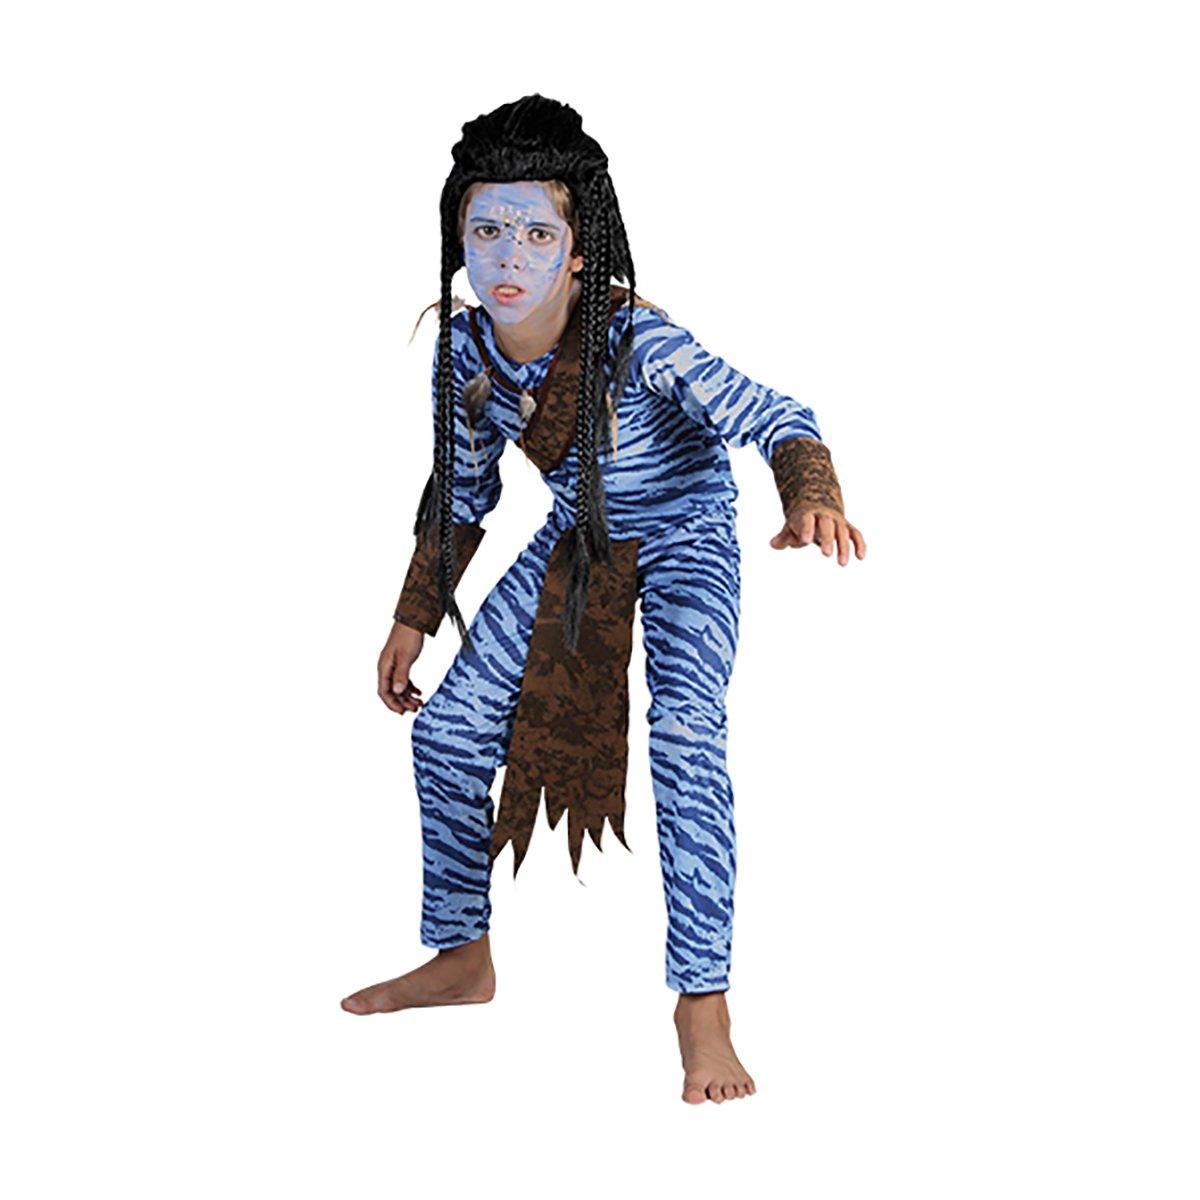 Costume Avatar Guerriero